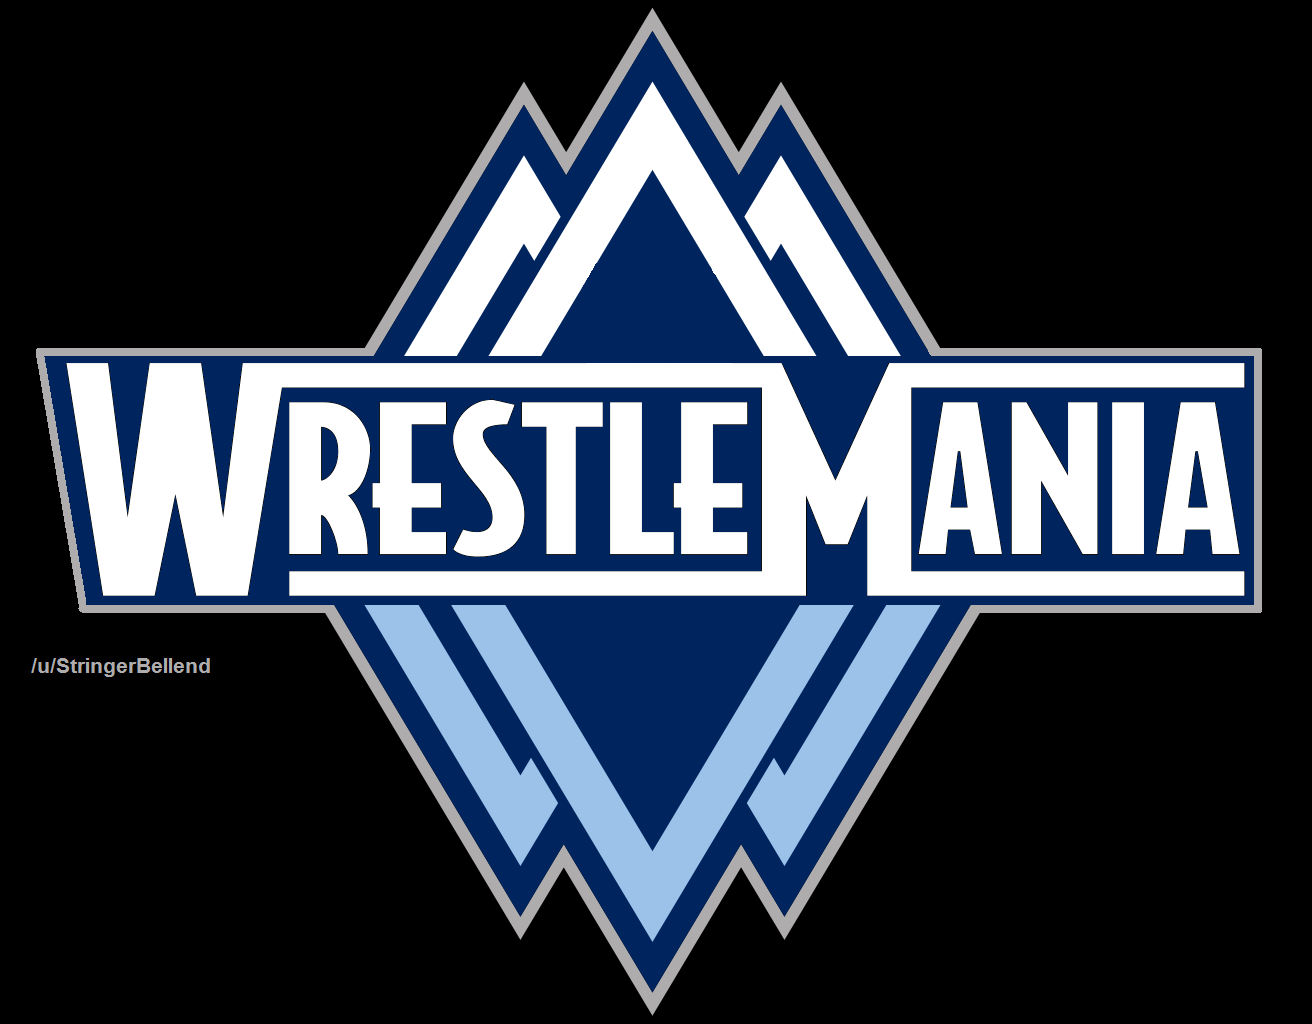 Custom WWE Logo - Custom WrestleMania 35 logo (Vancouver) : SquaredCircle